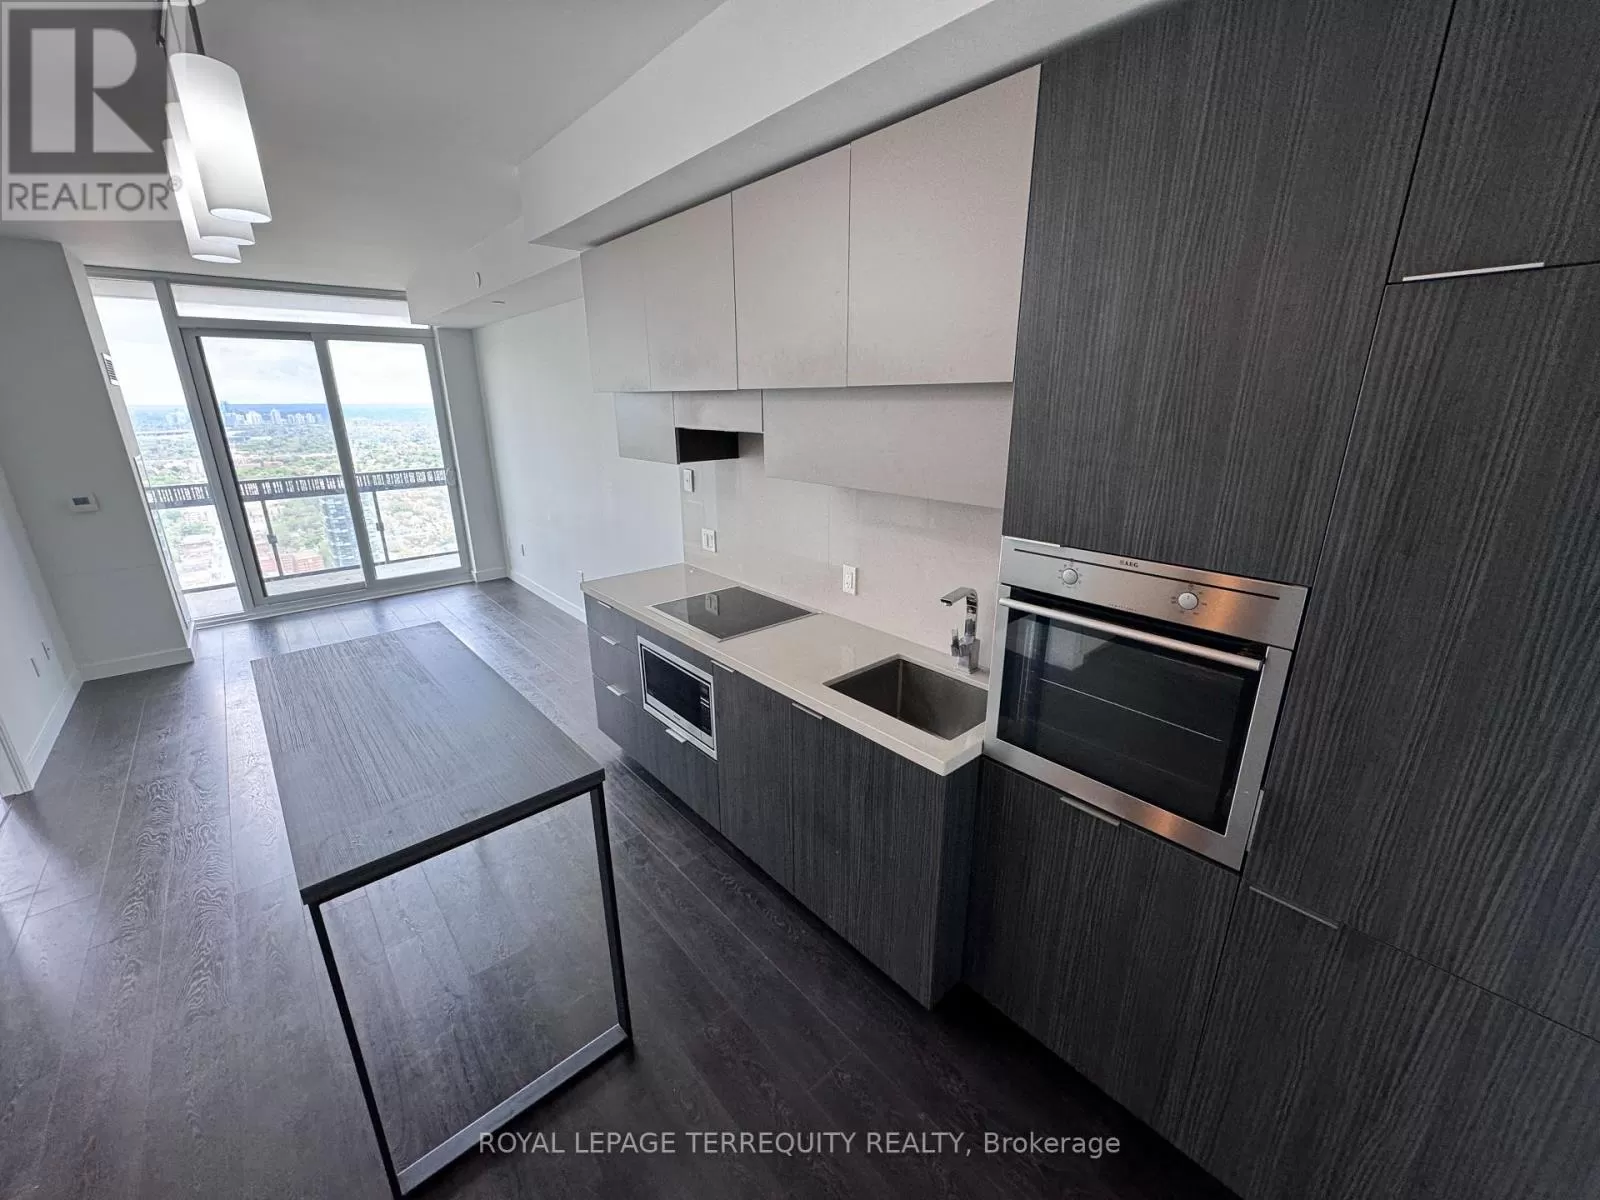 Apartment for rent: 4706 - 8 Eglinton Avenue E, Toronto, Ontario M4P 0C1